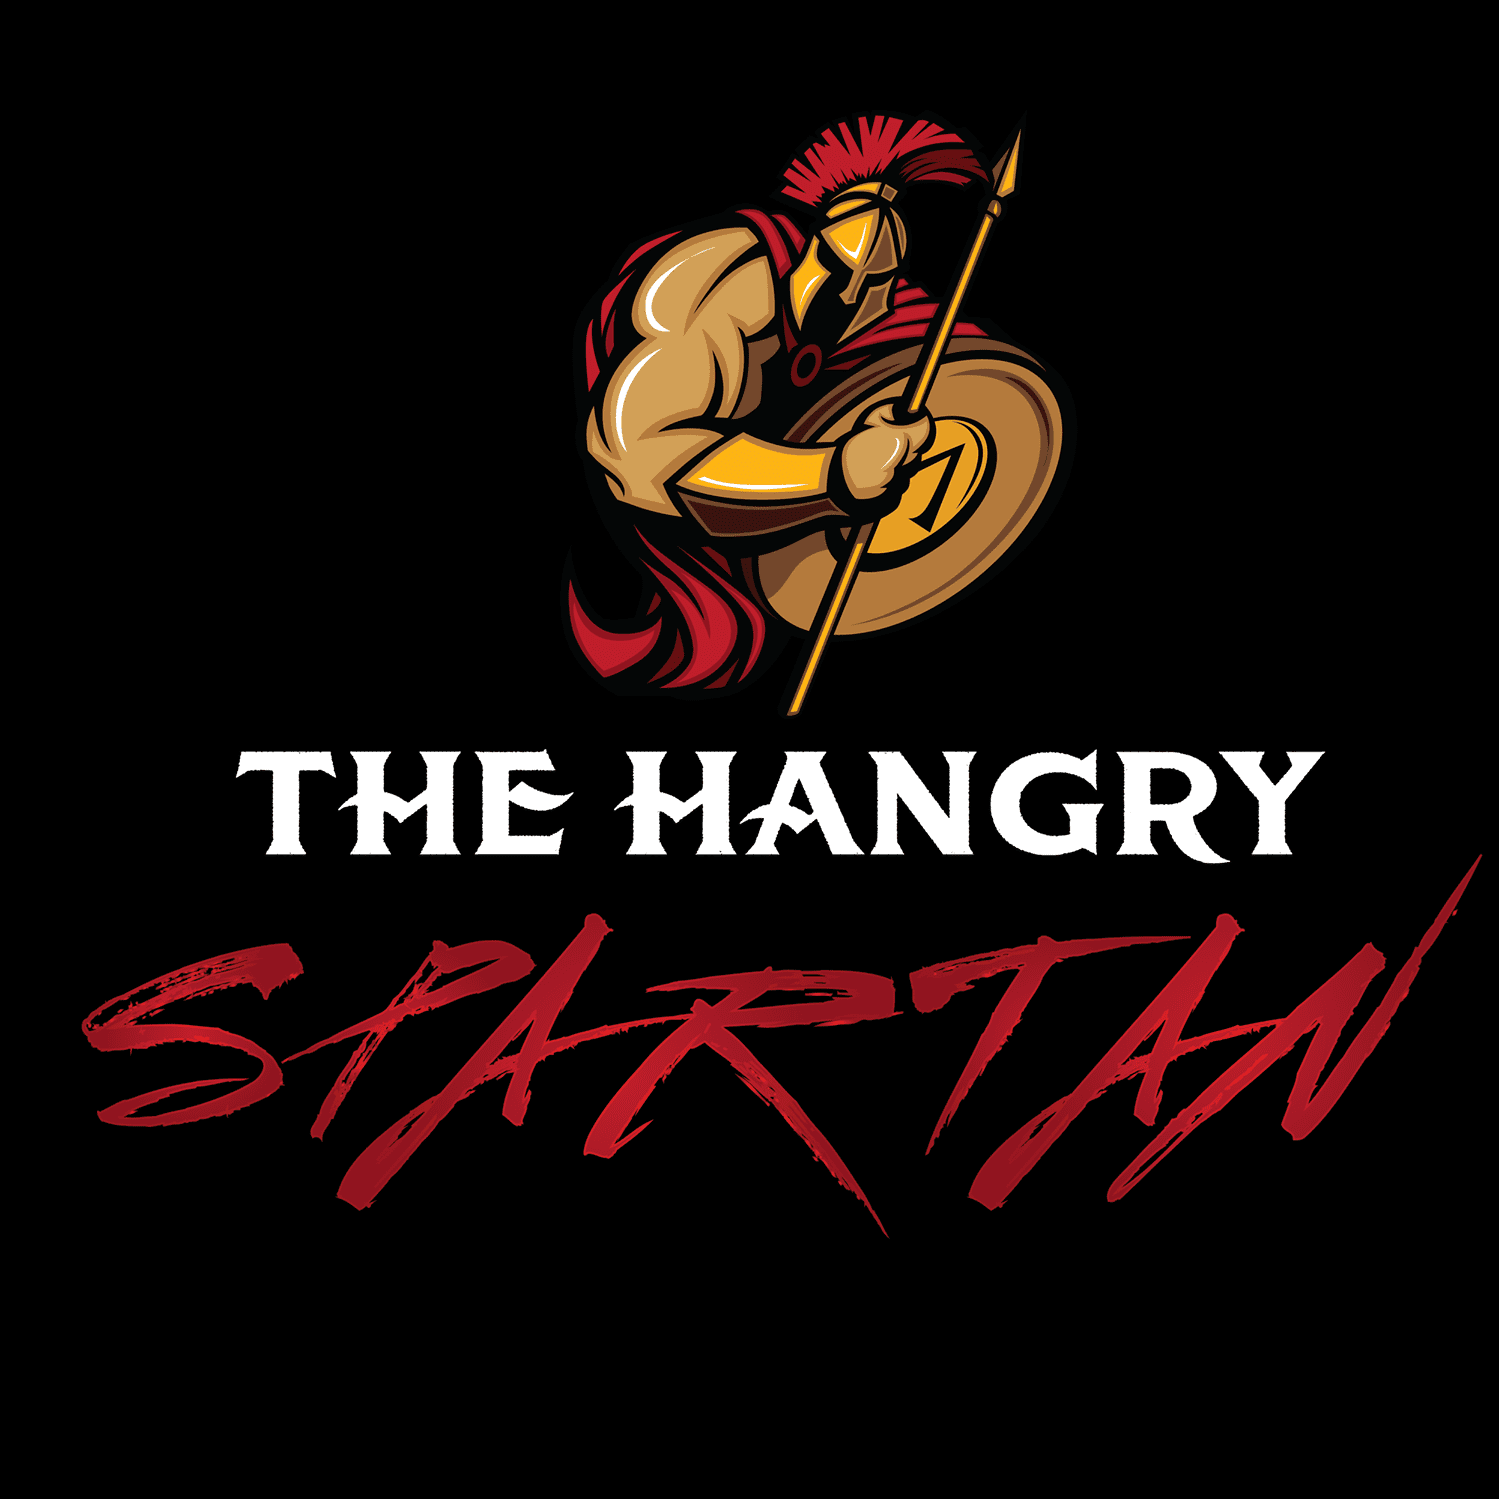 Hangry Spartan food truck logo